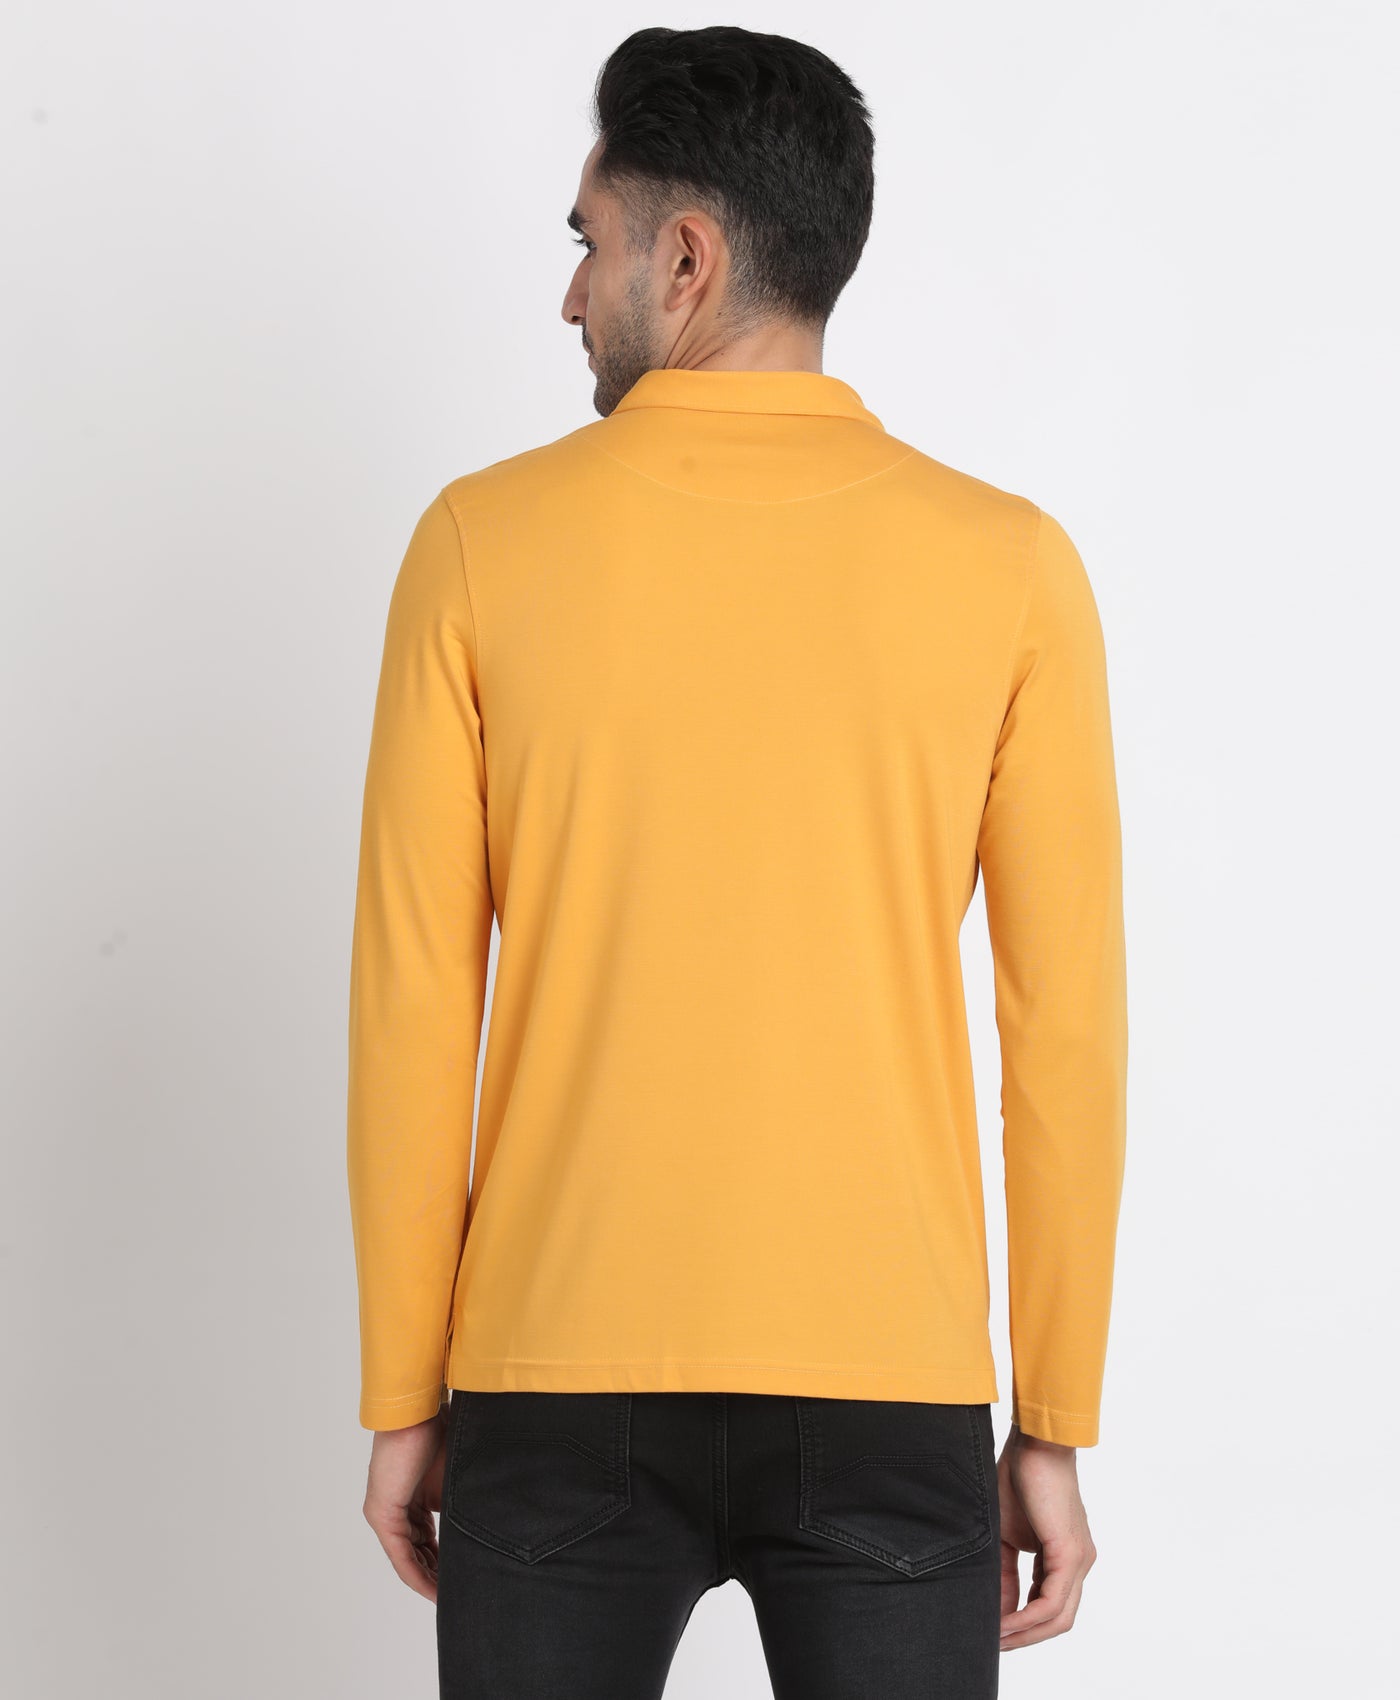 Cotton Tencel Mustard Yellow Plain Polo Neck Full Sleeve Casual T-Shirt